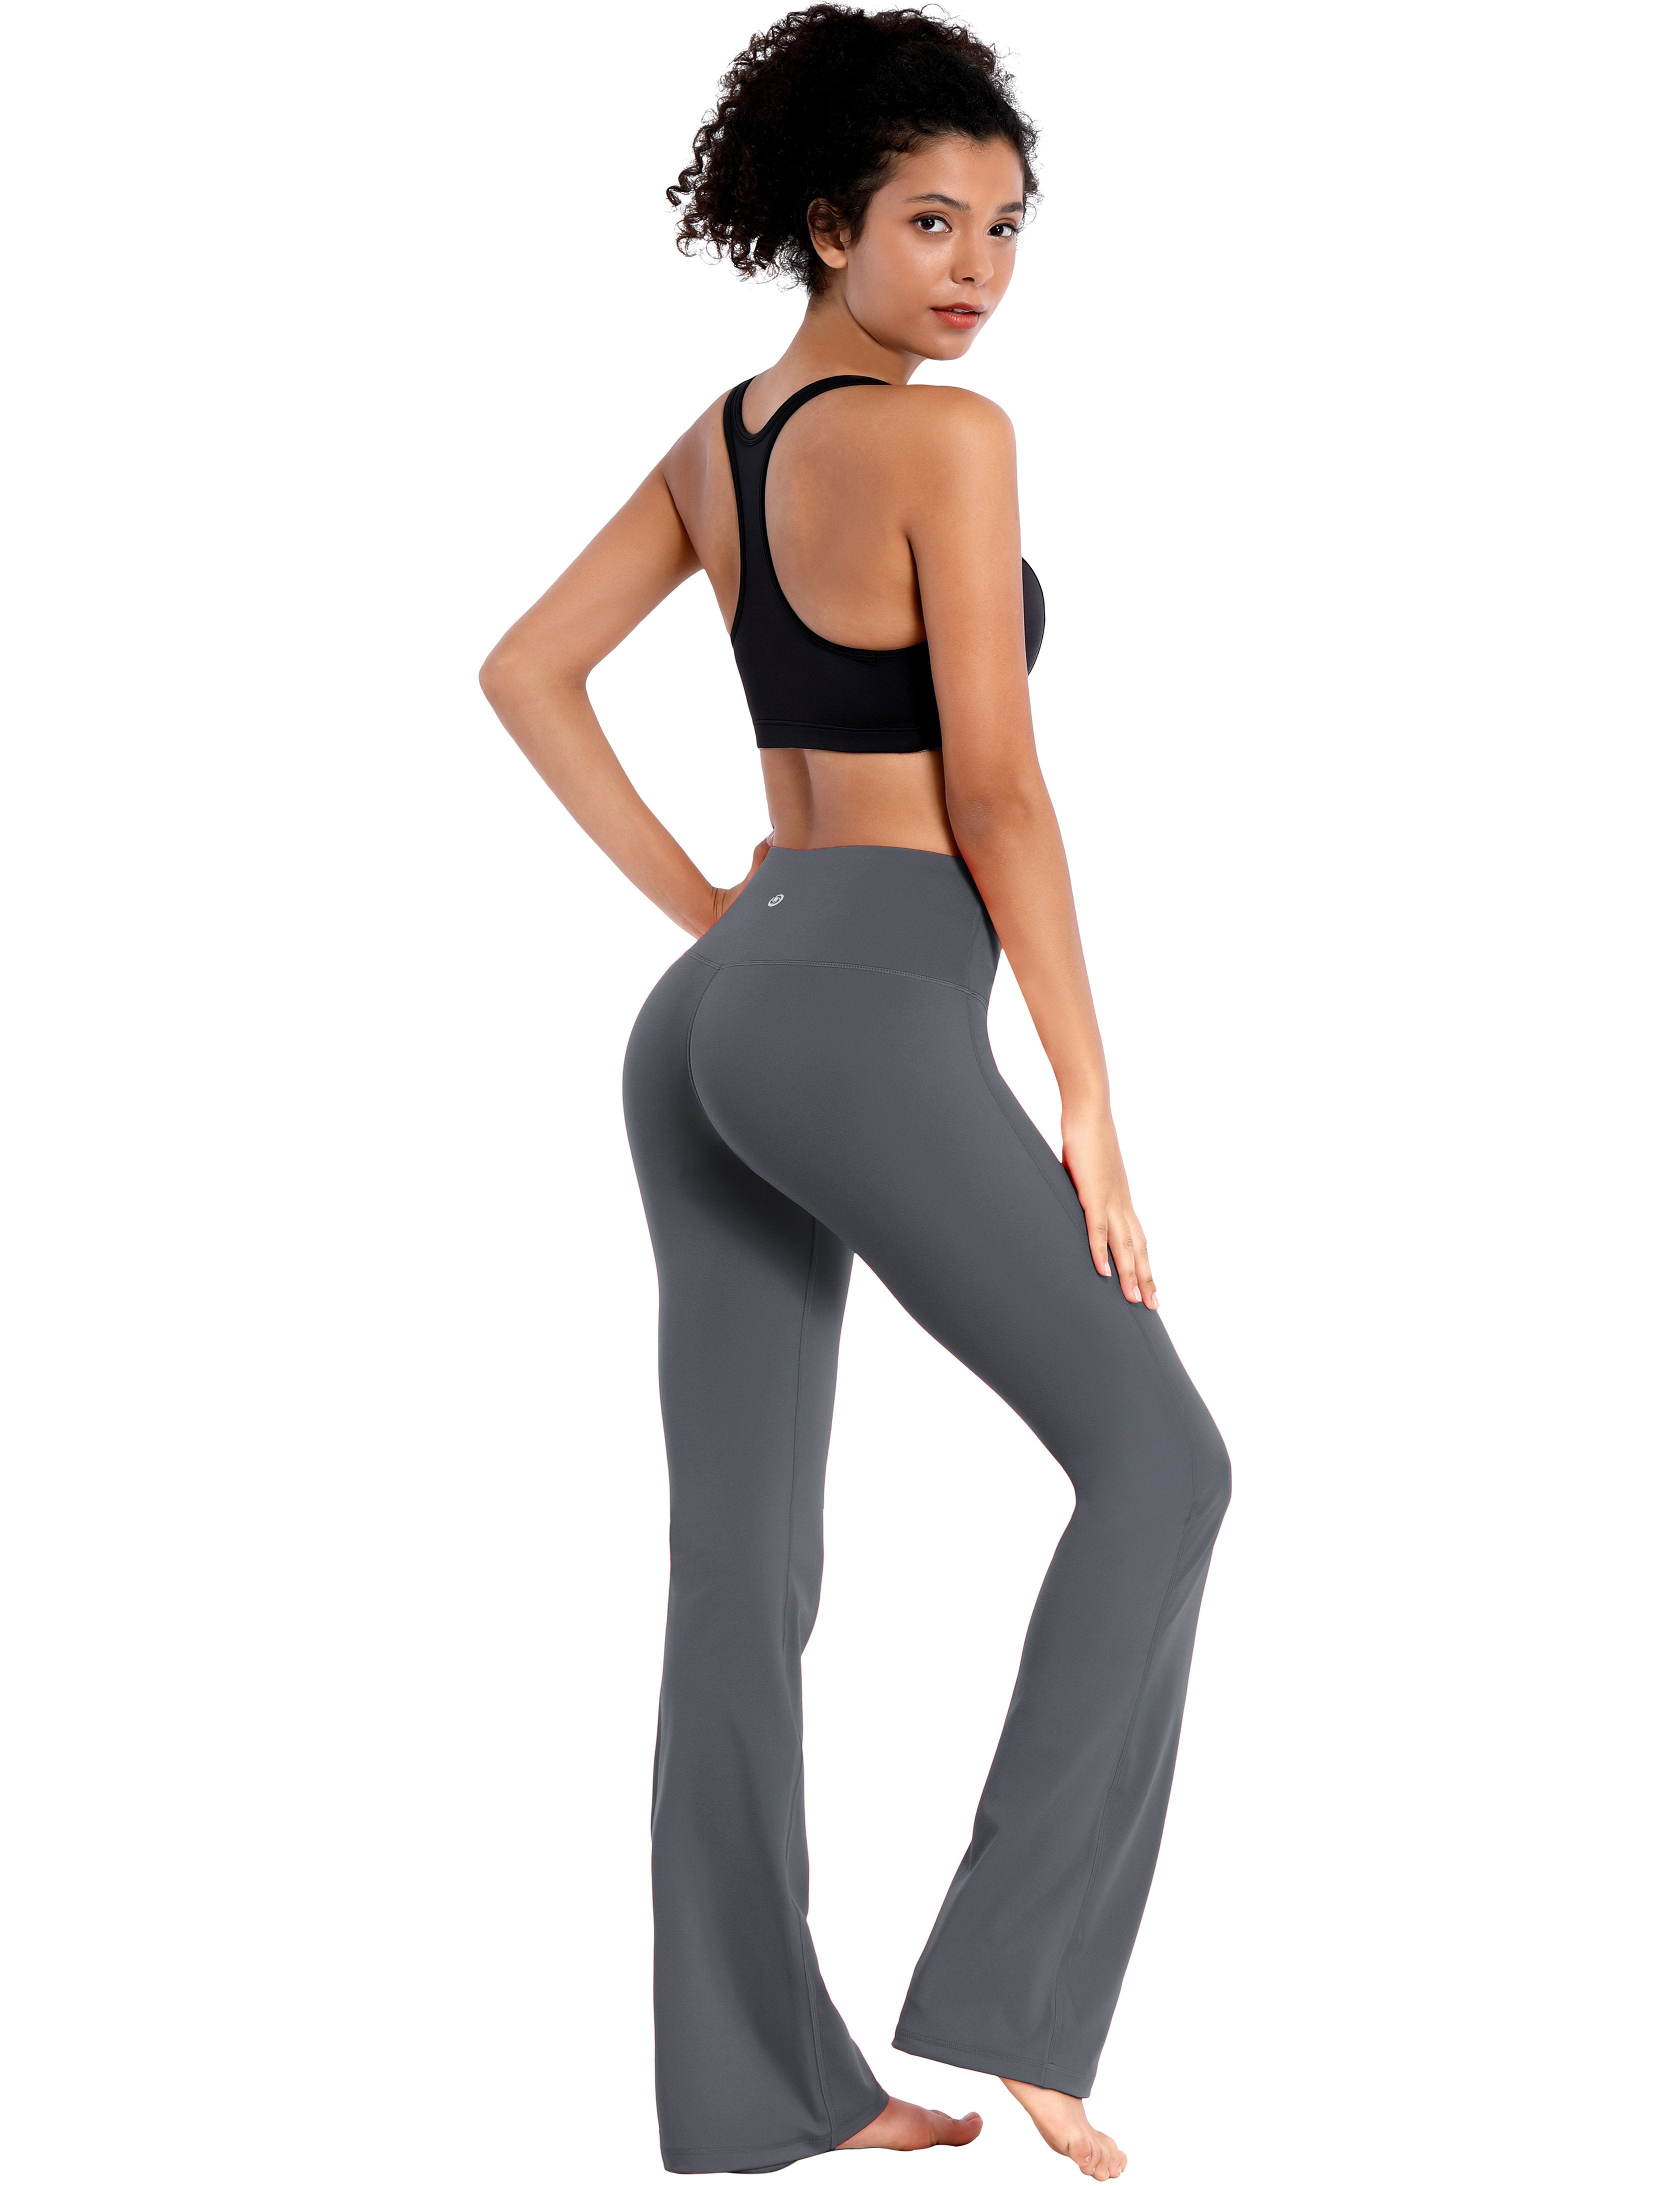  BUBBLELIME 29/31/33/35 4 Styles Womens Bootcut Yoga Pants  Tummy Control - Back PocketsDarkpurple XL29 Inseam